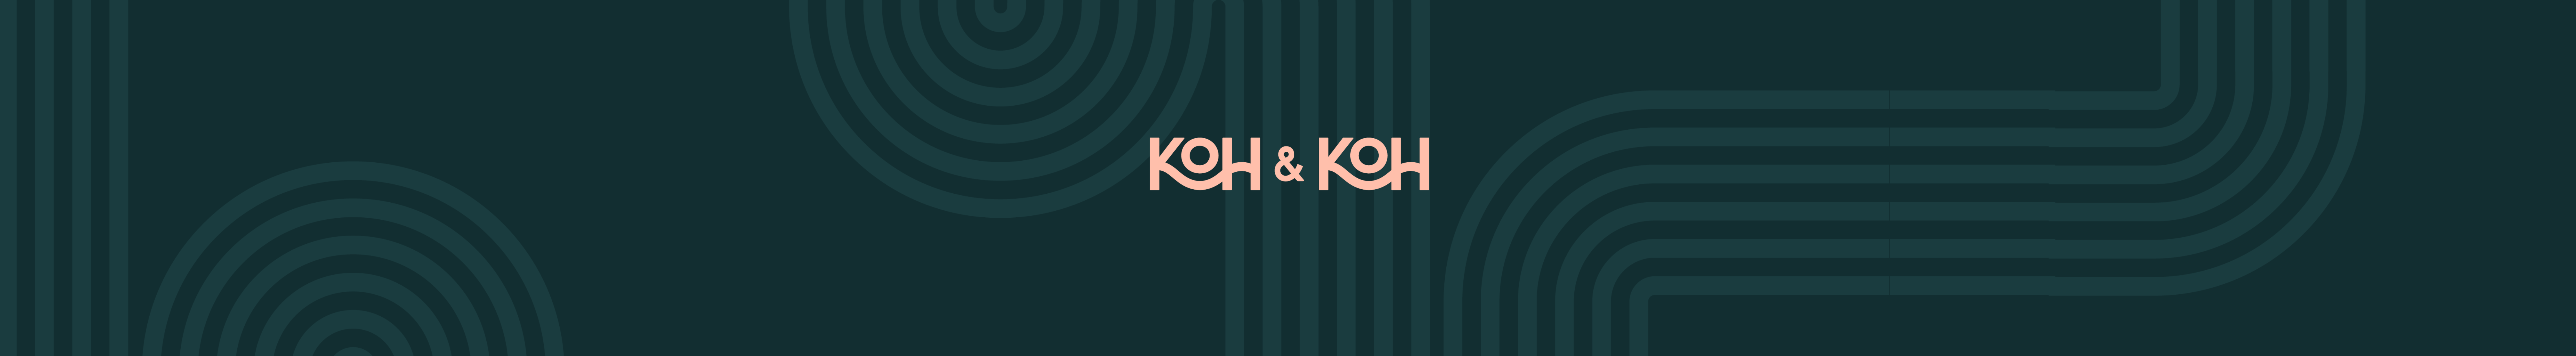 Koh & Koh's profile banner